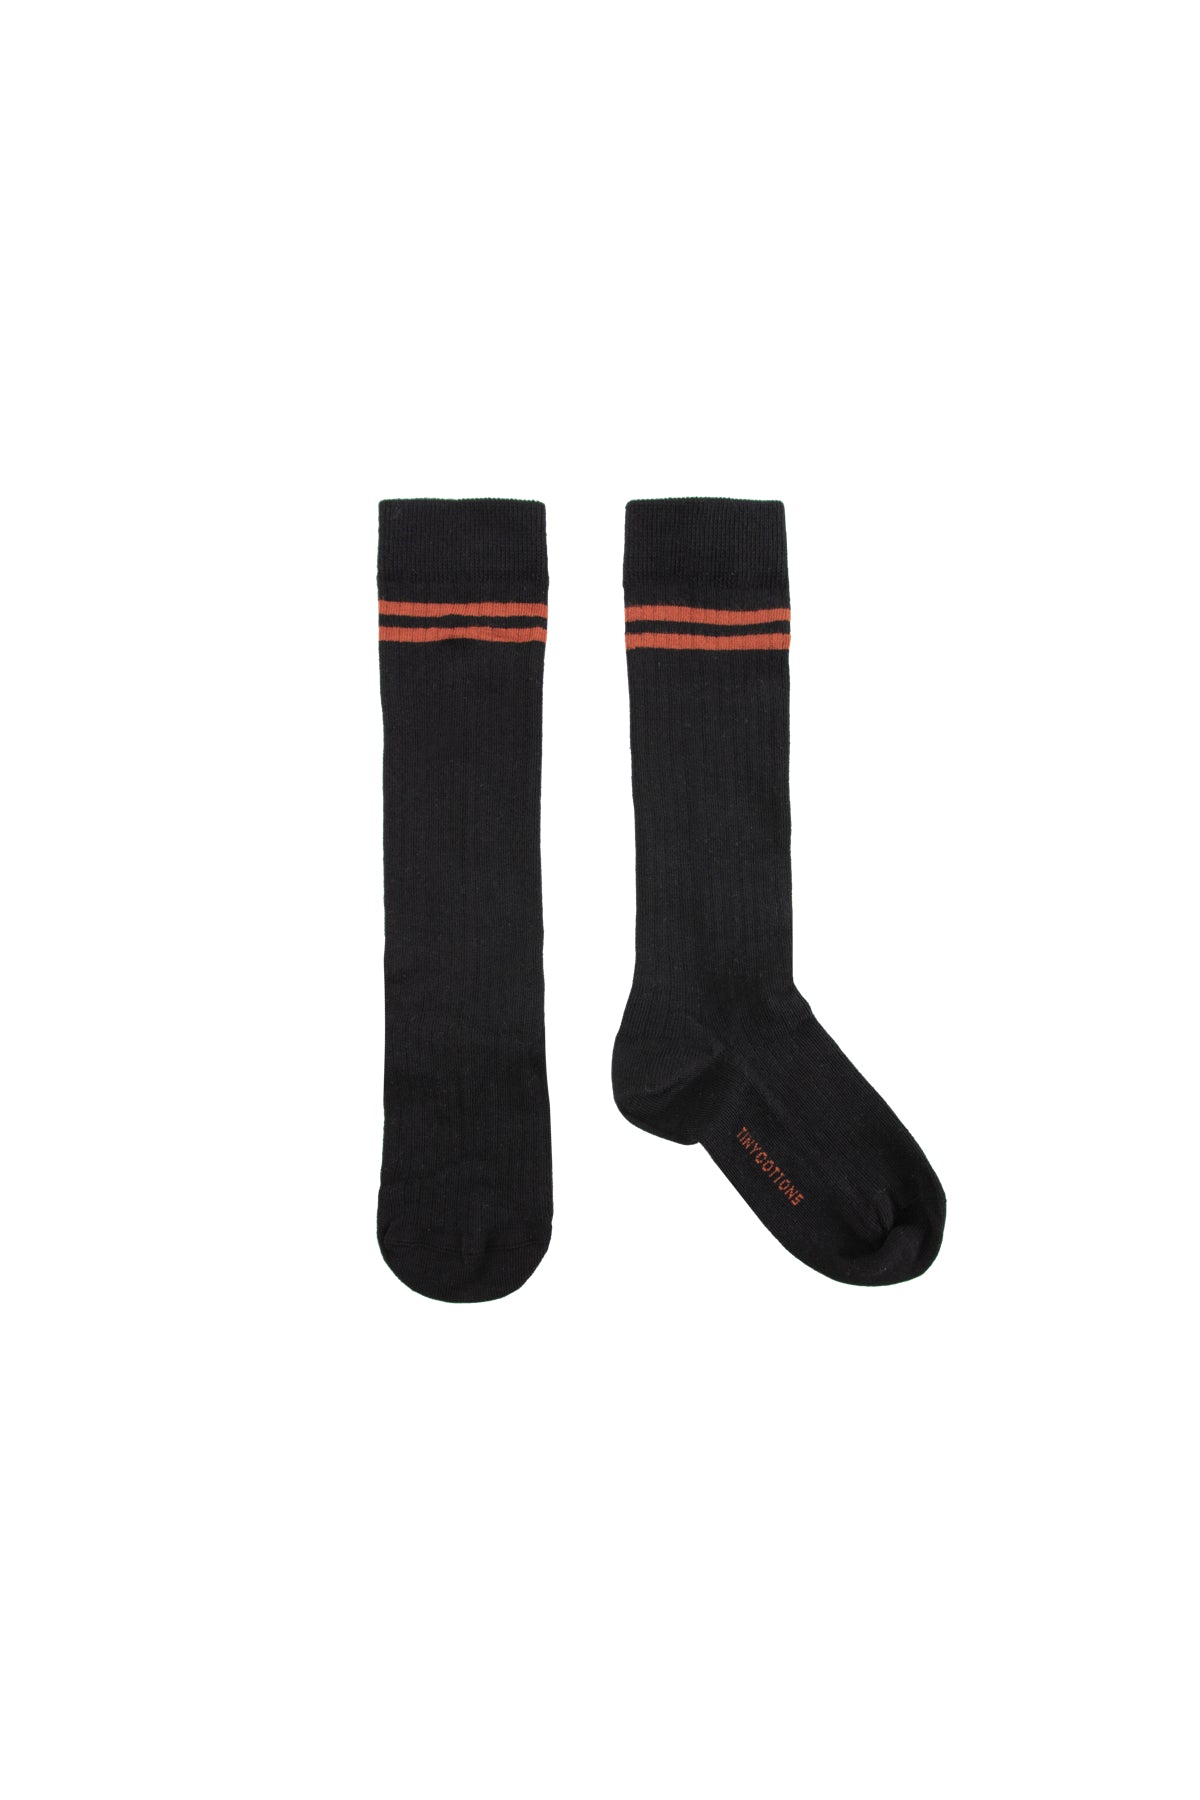 Boys & Girls Black Stripes High Socks